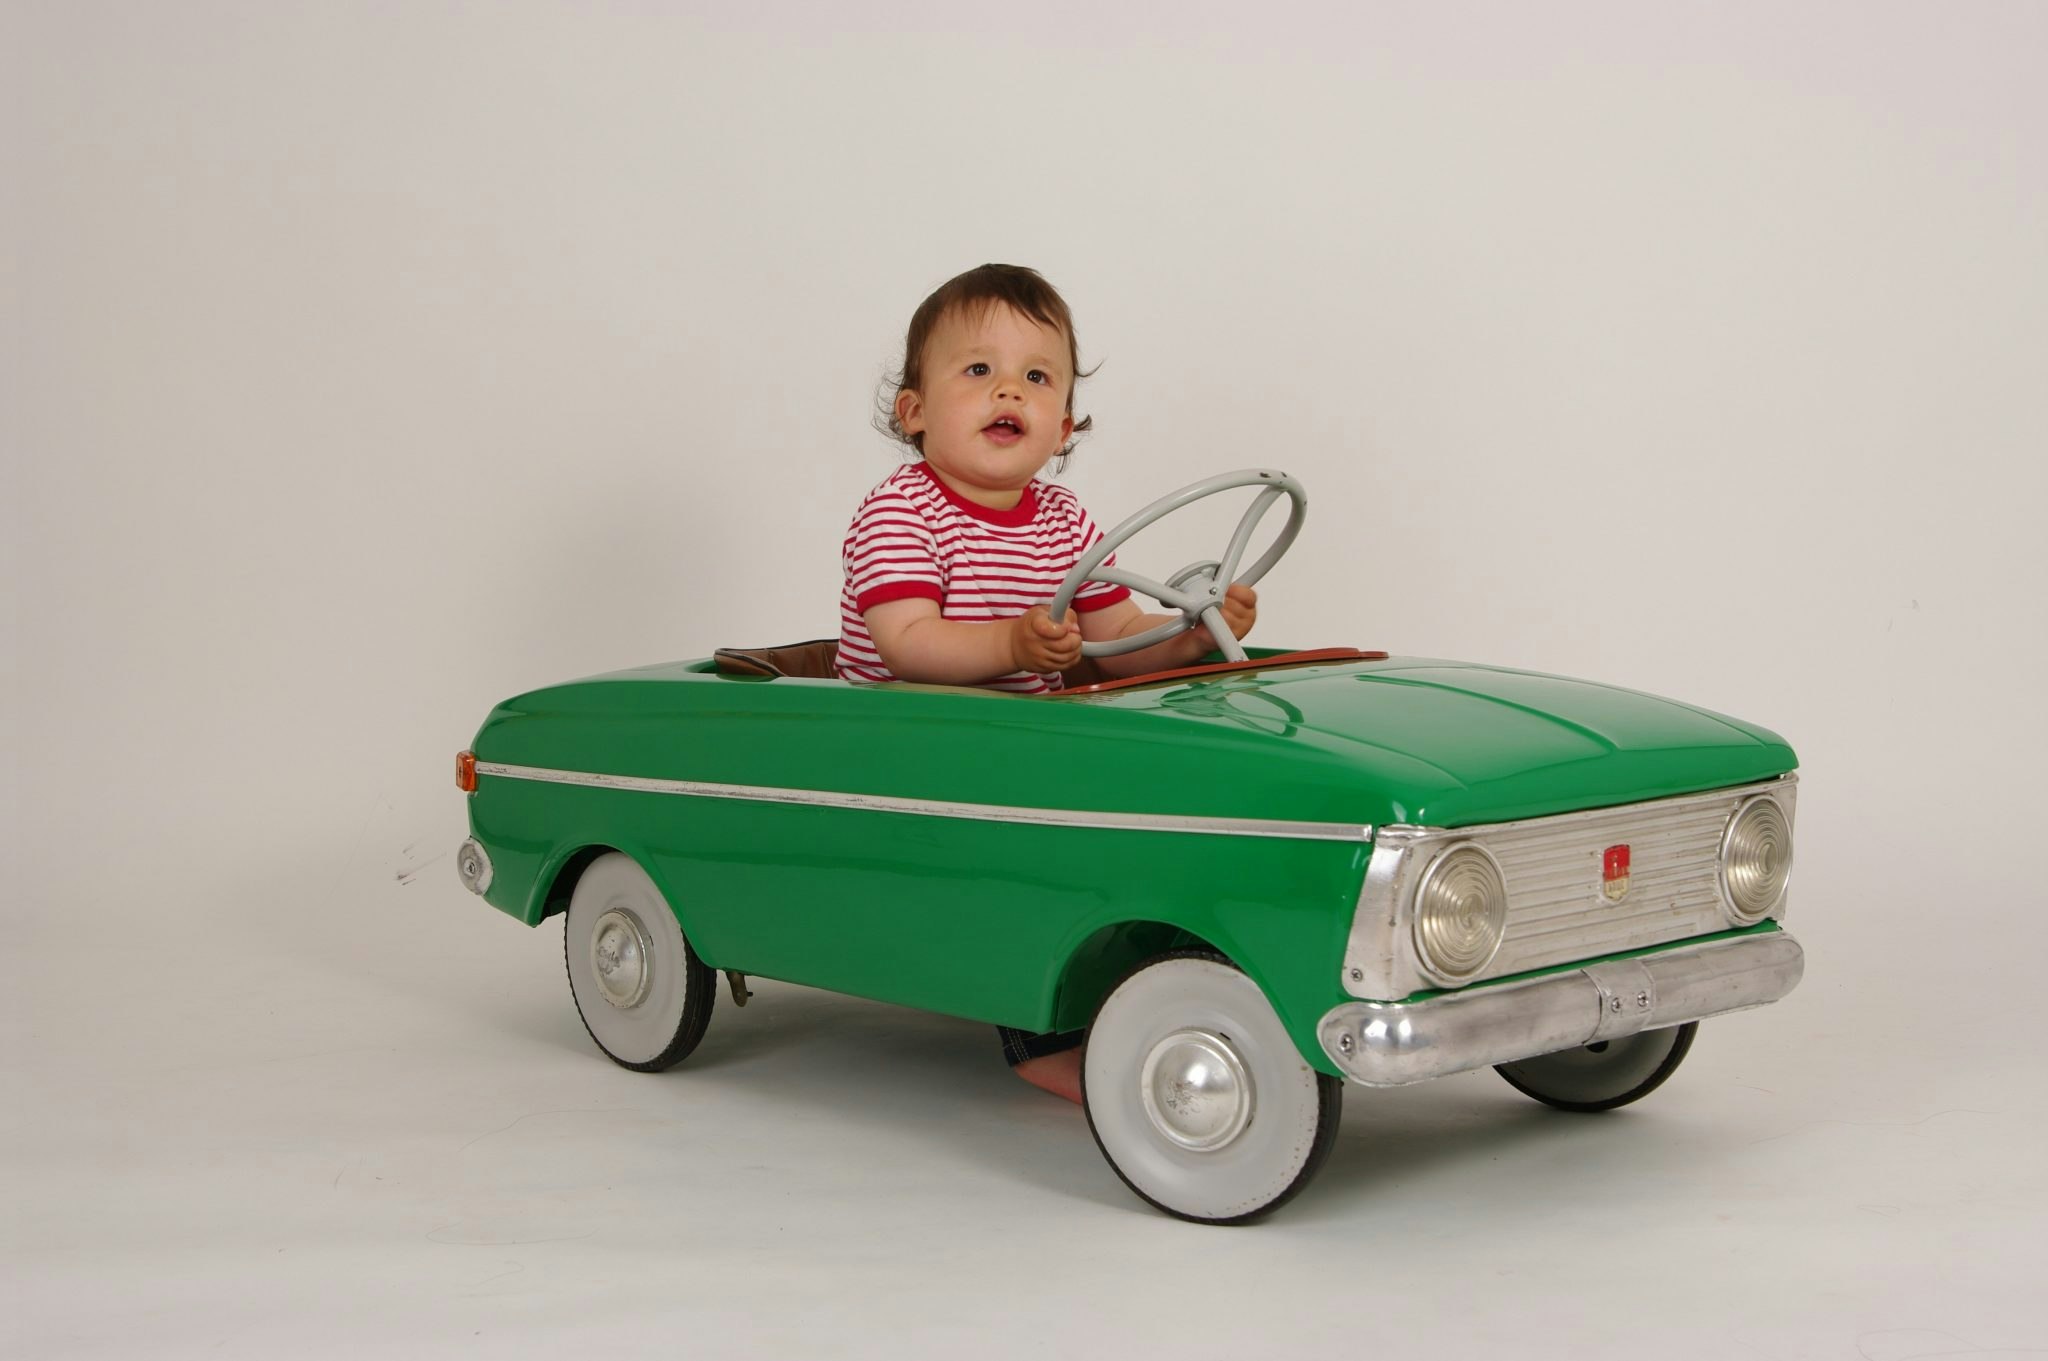 Child in a retro toy car